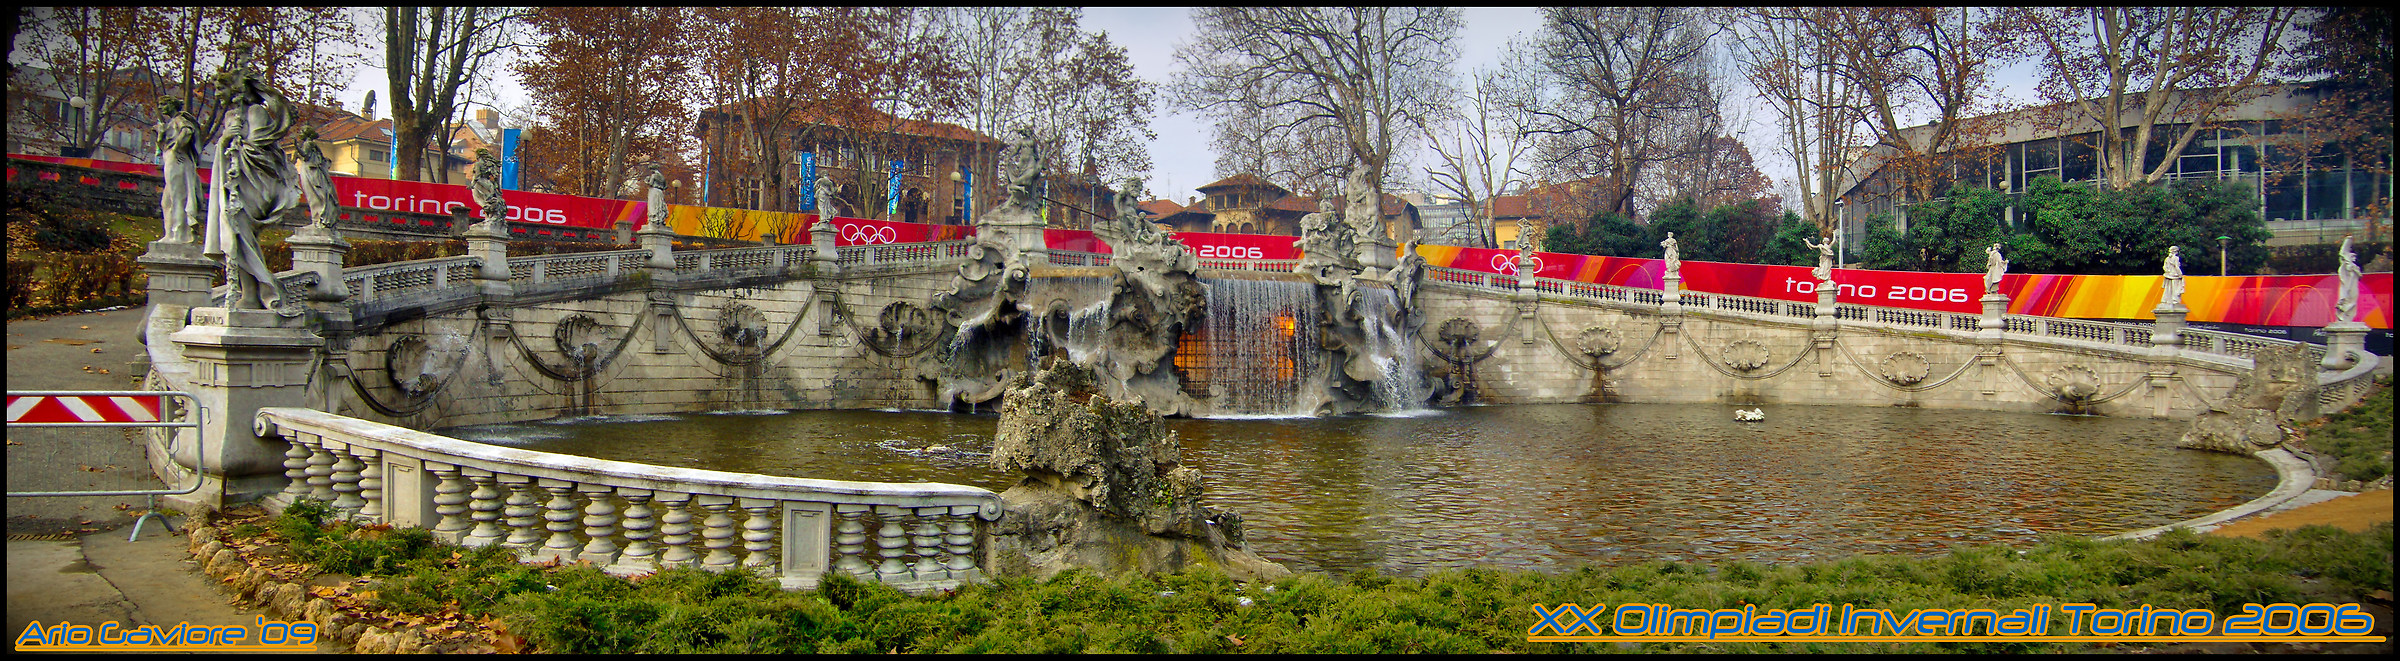 Fountain of the Four Seasons...